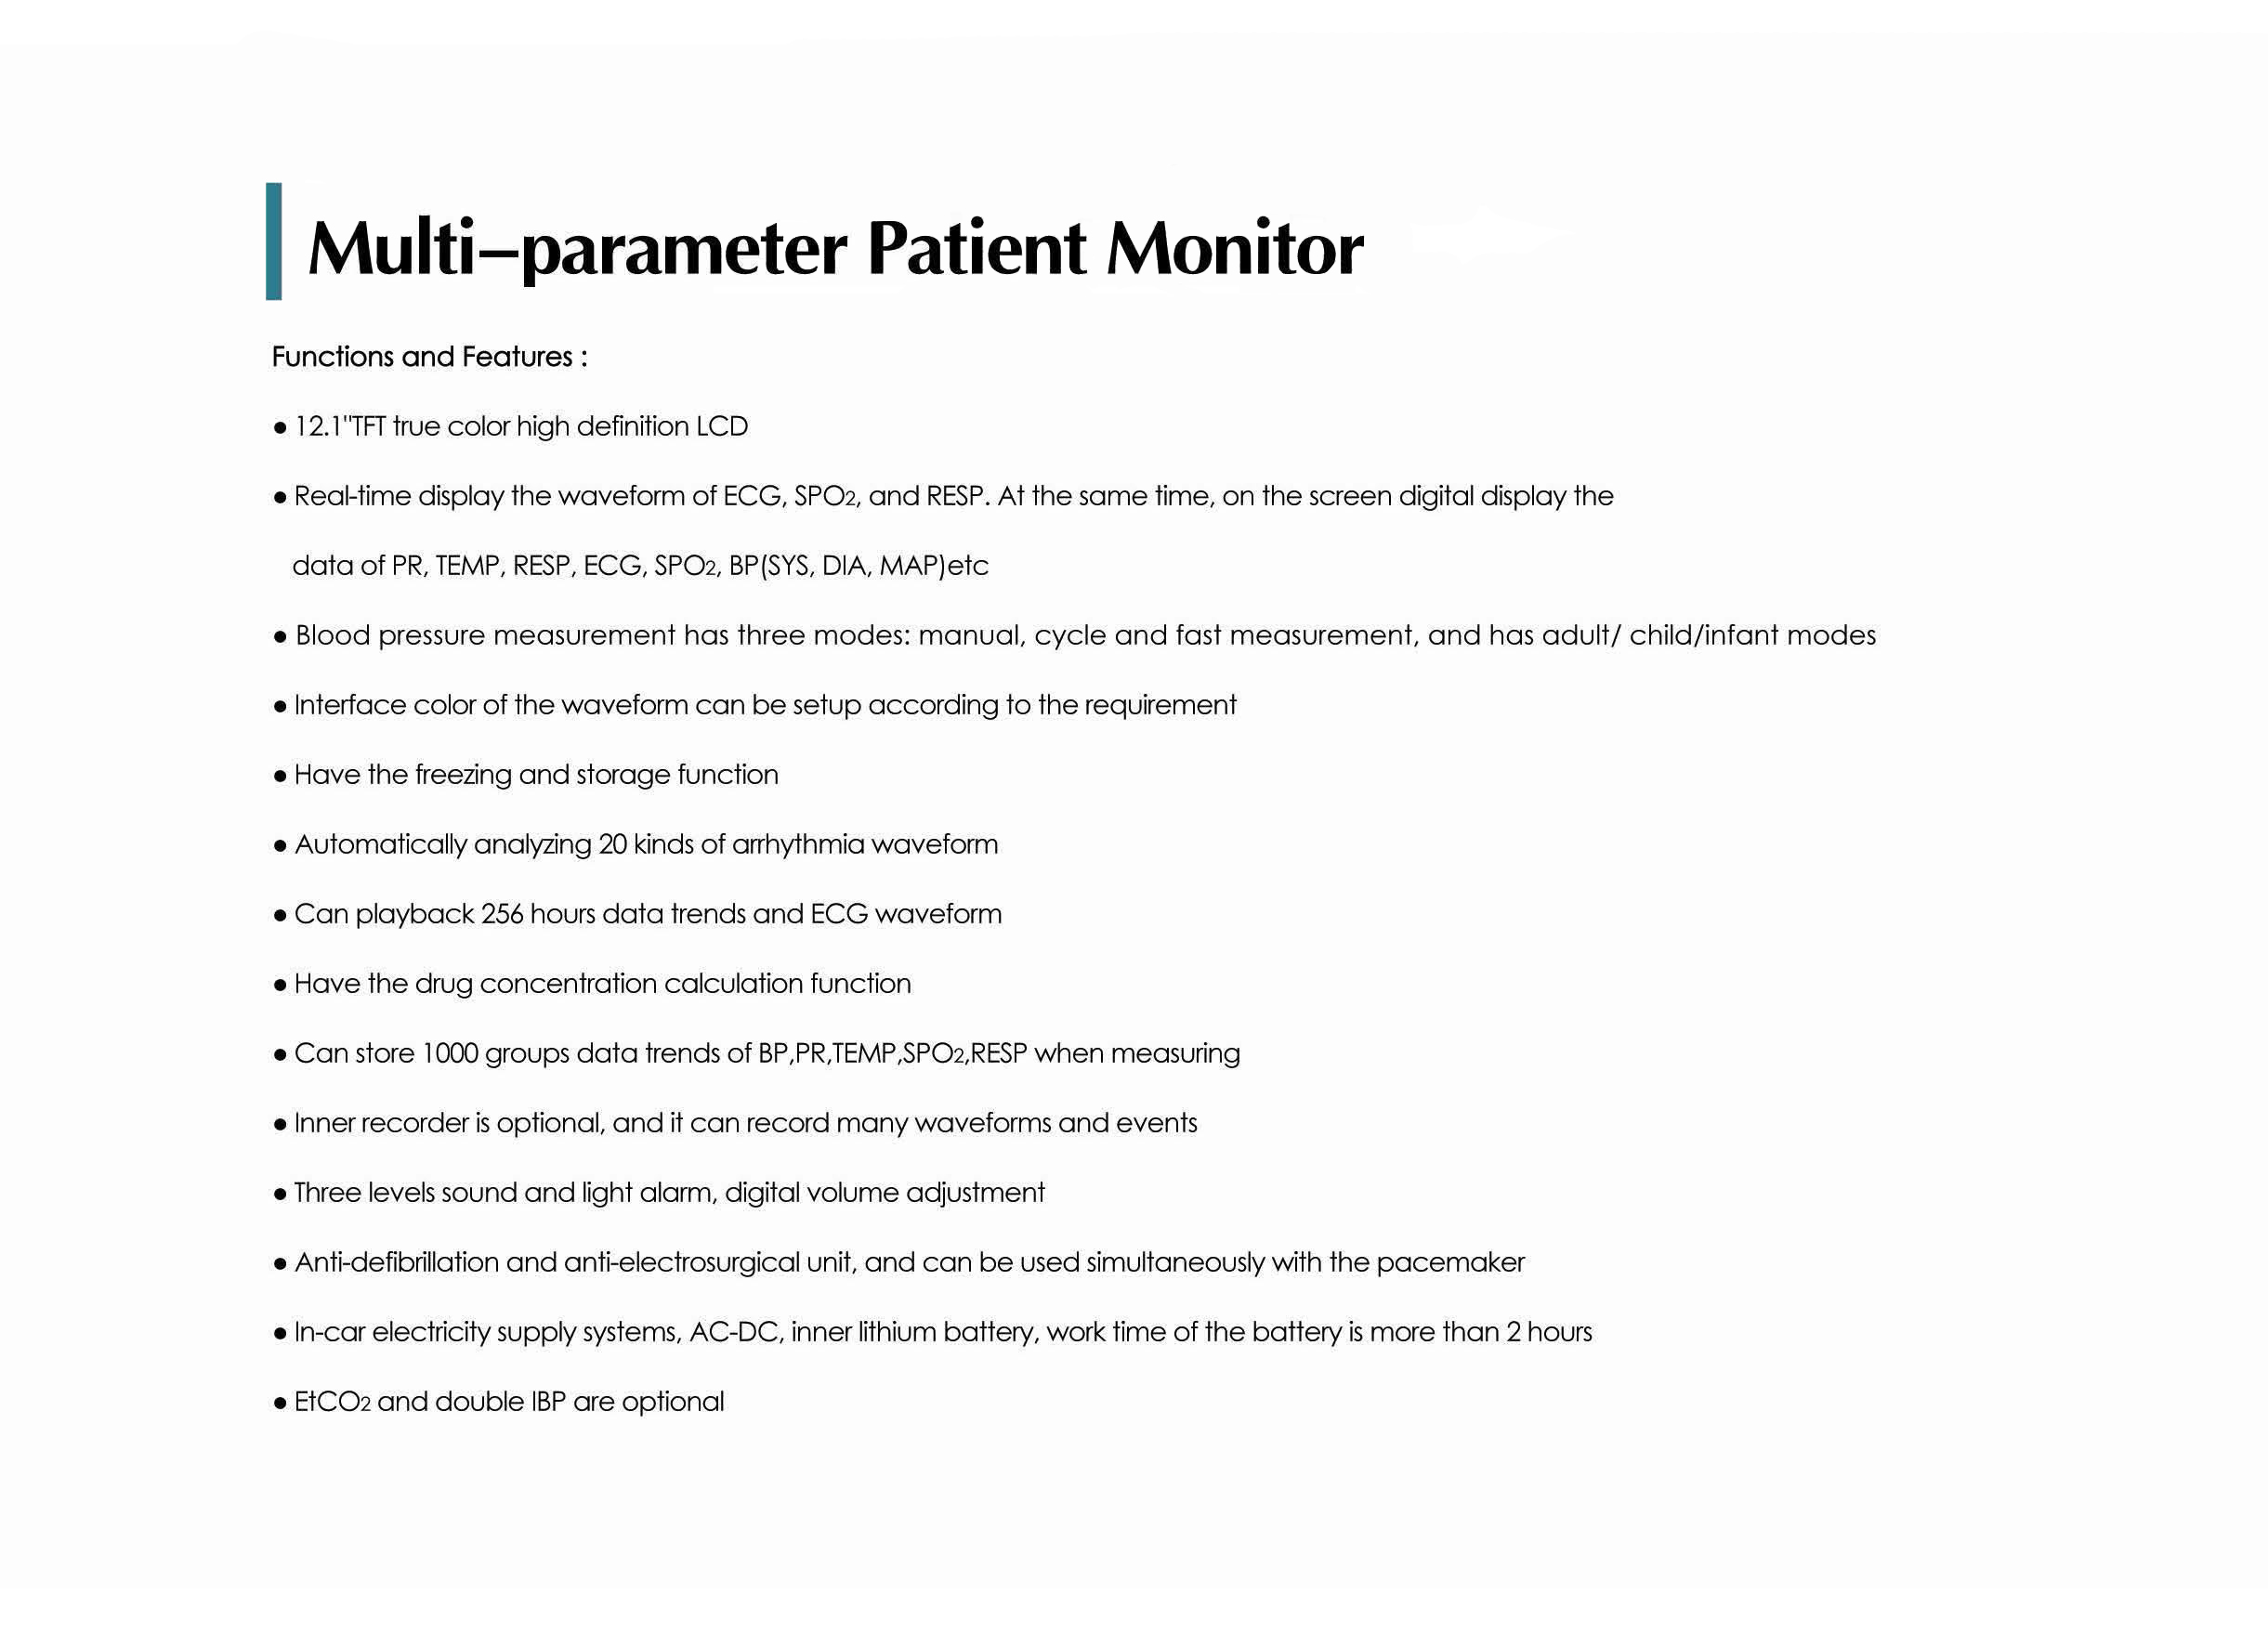 Raecho Multi-parameter Patient Monitor601B-1.jpg